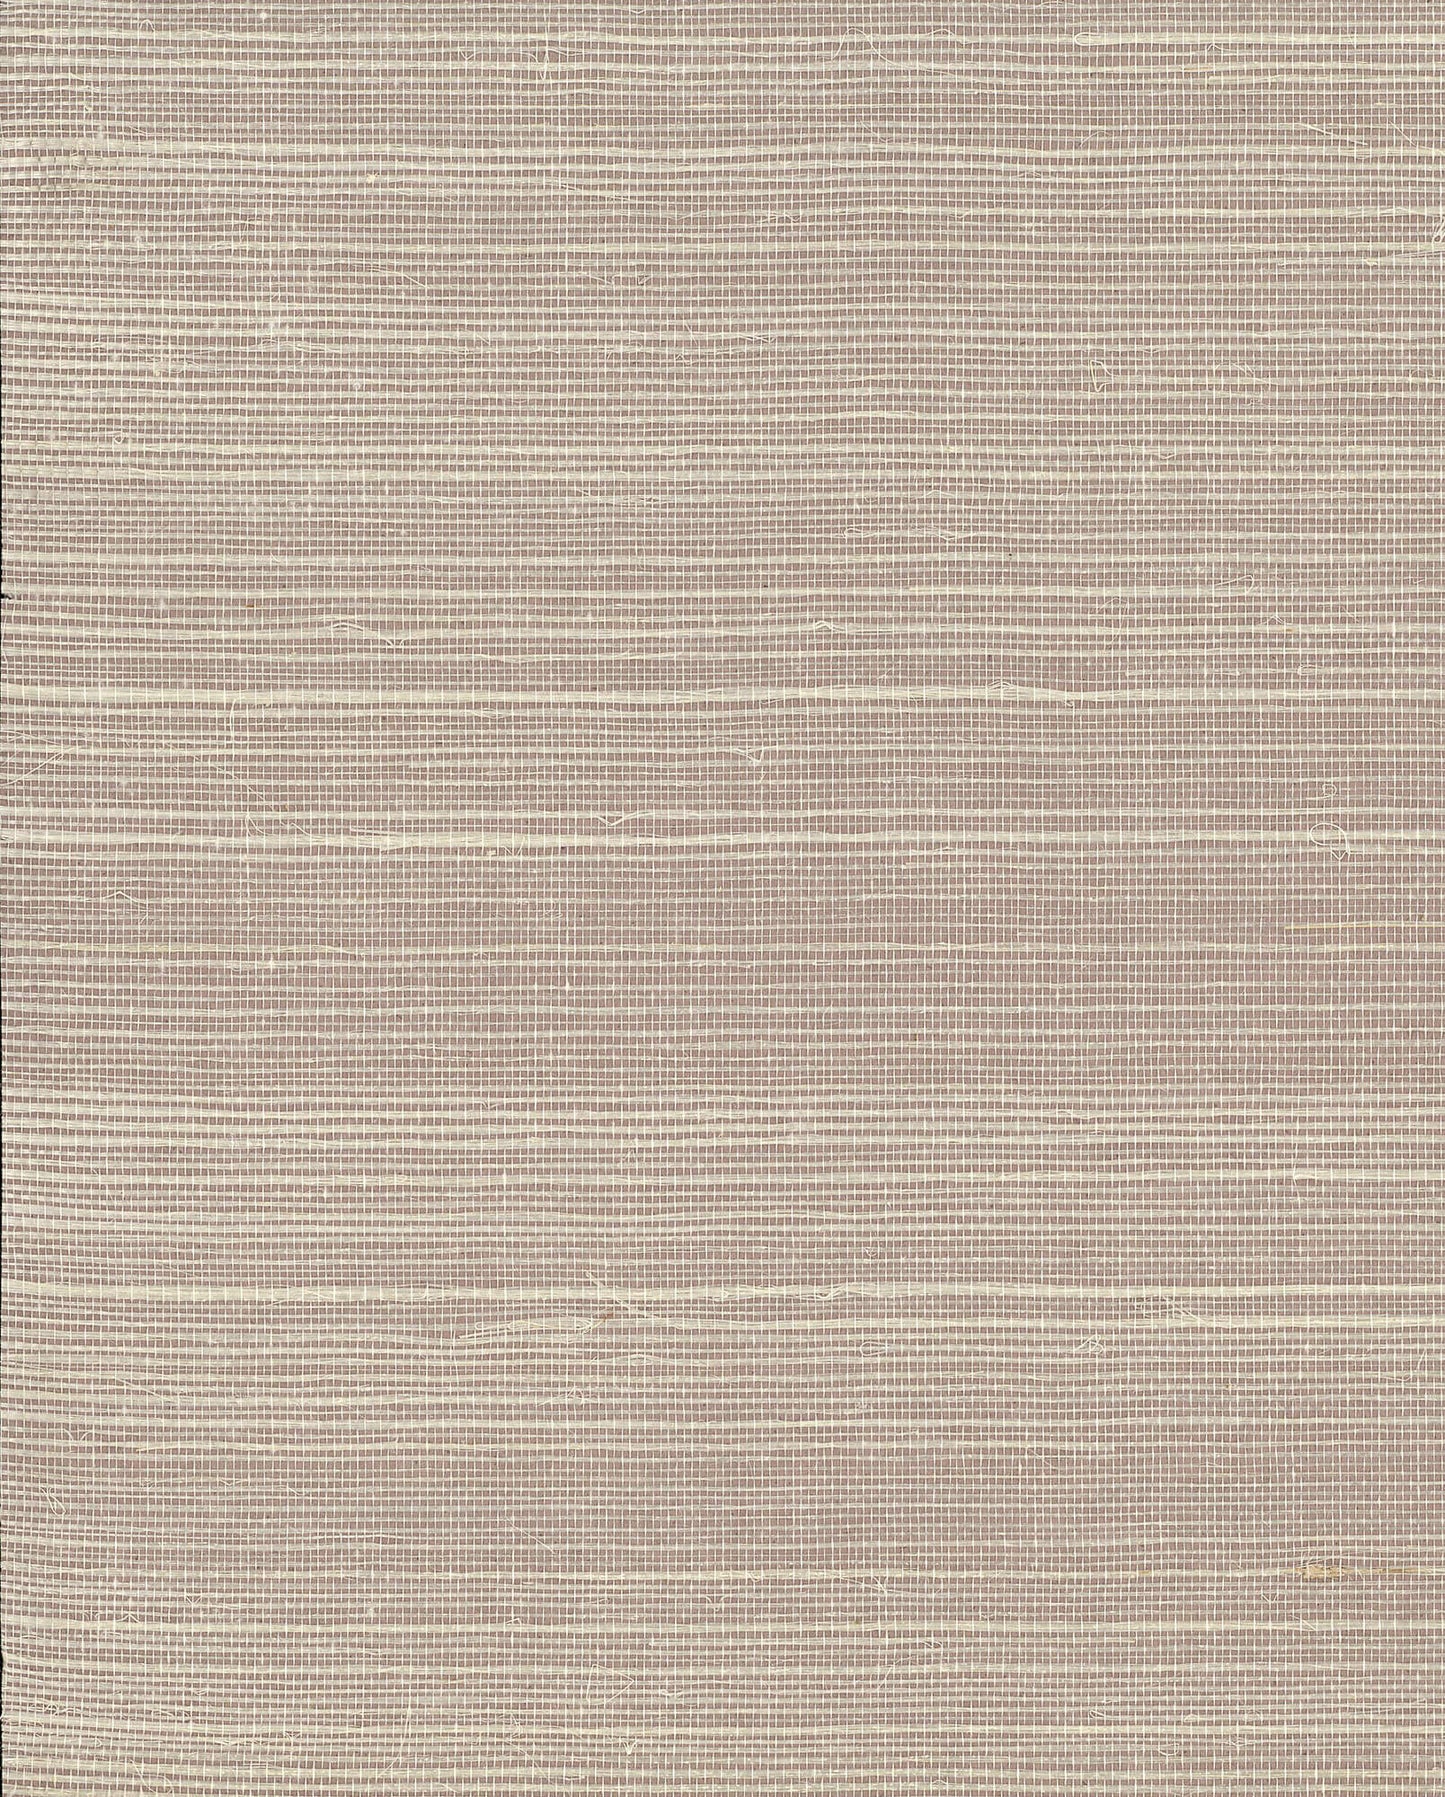 VG4406MH Magnolia Home Plain Grass Wallpaper Gray Beige